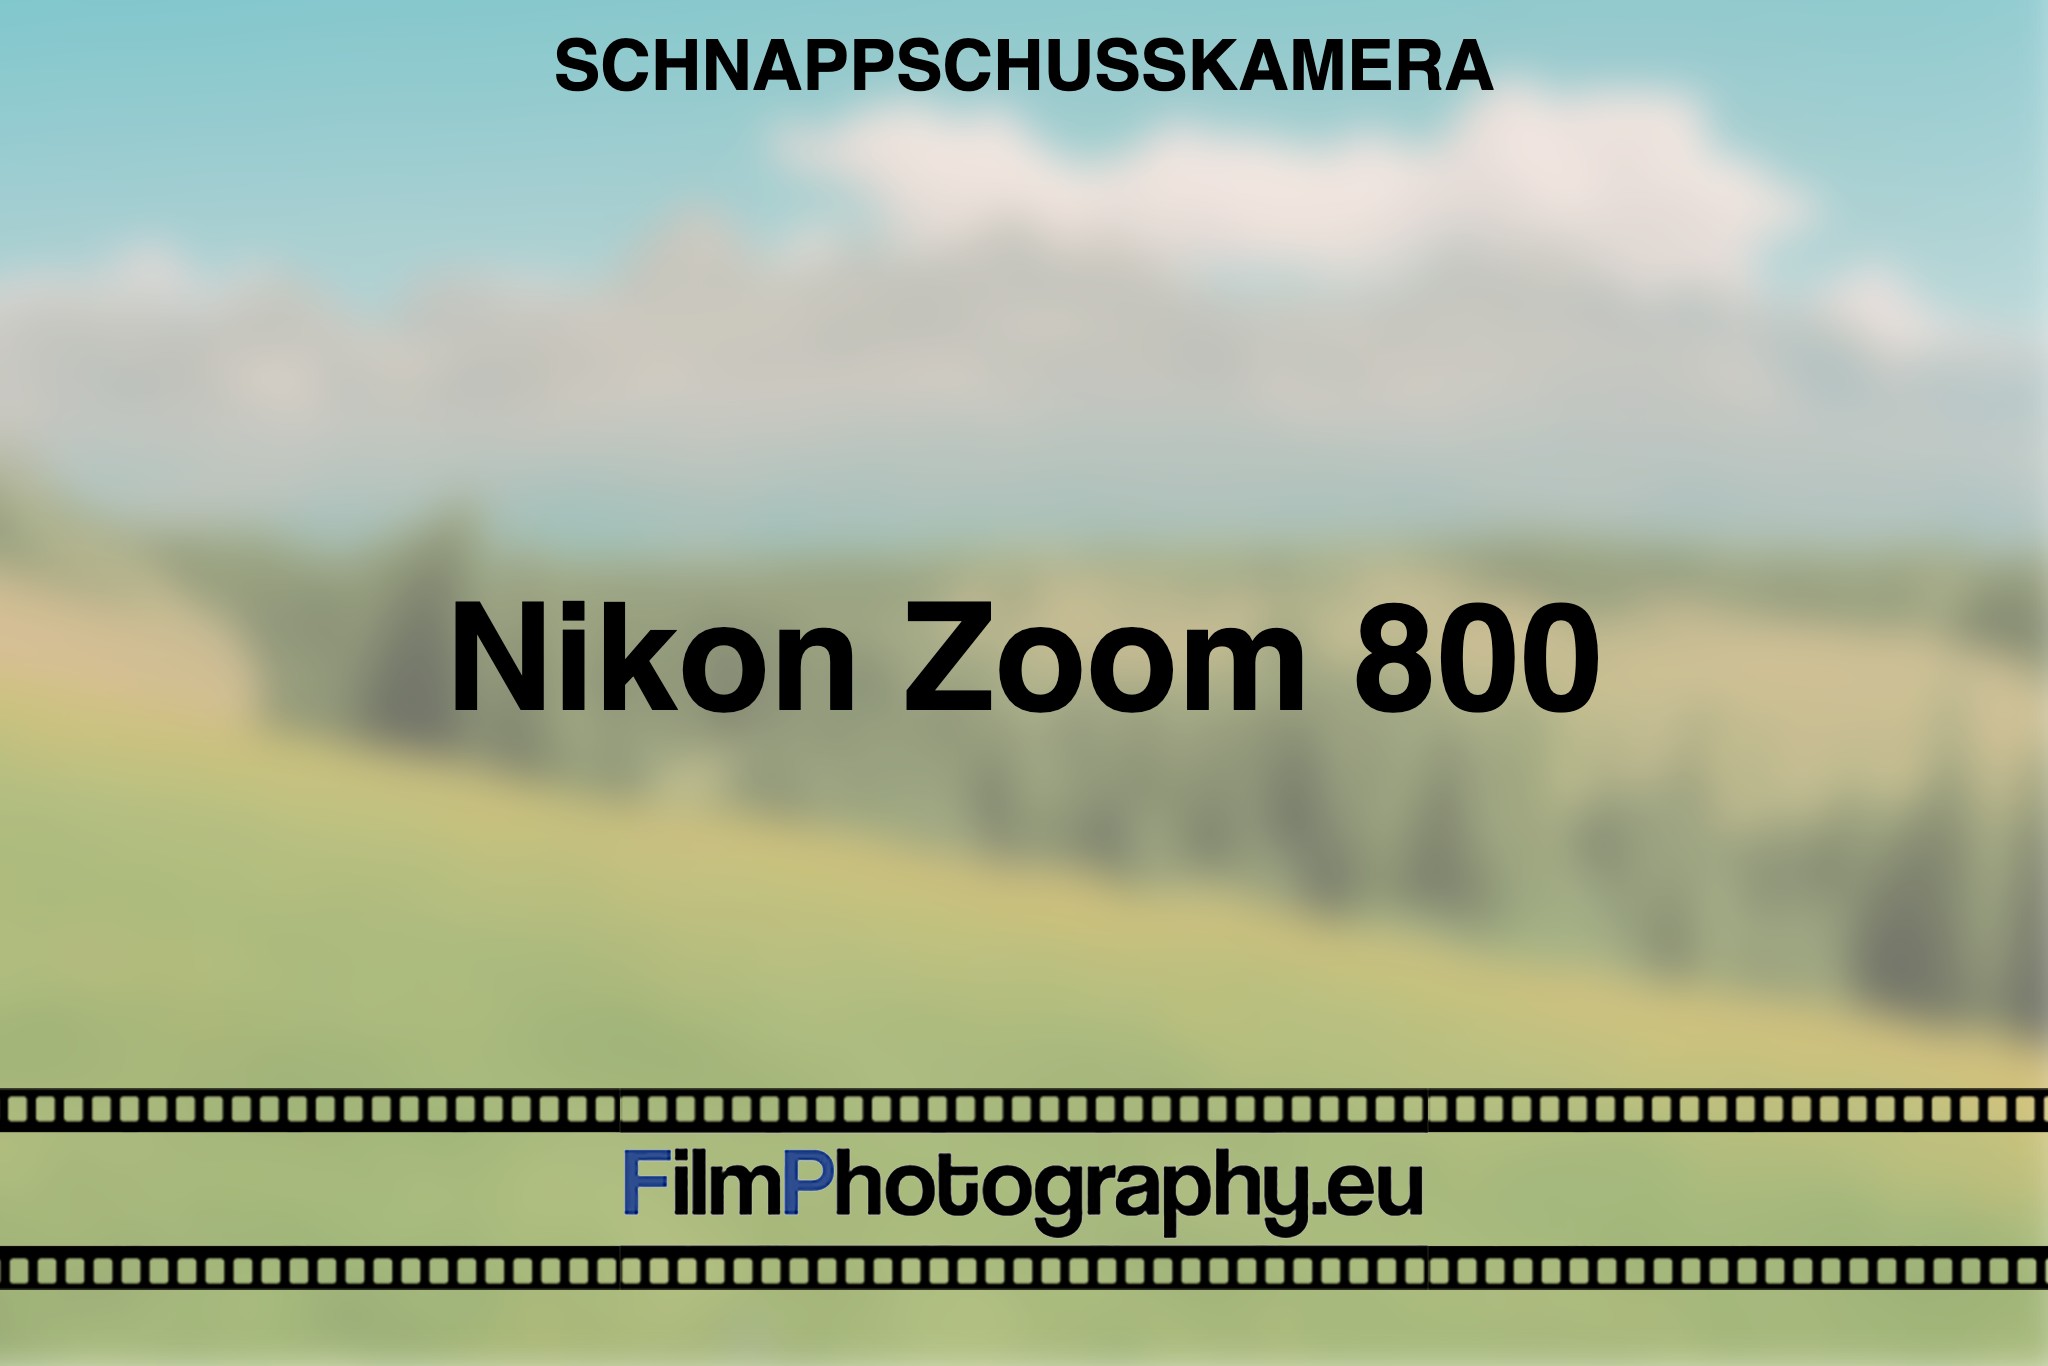 nikon-zoom-800-schnappschusskamera-bnv